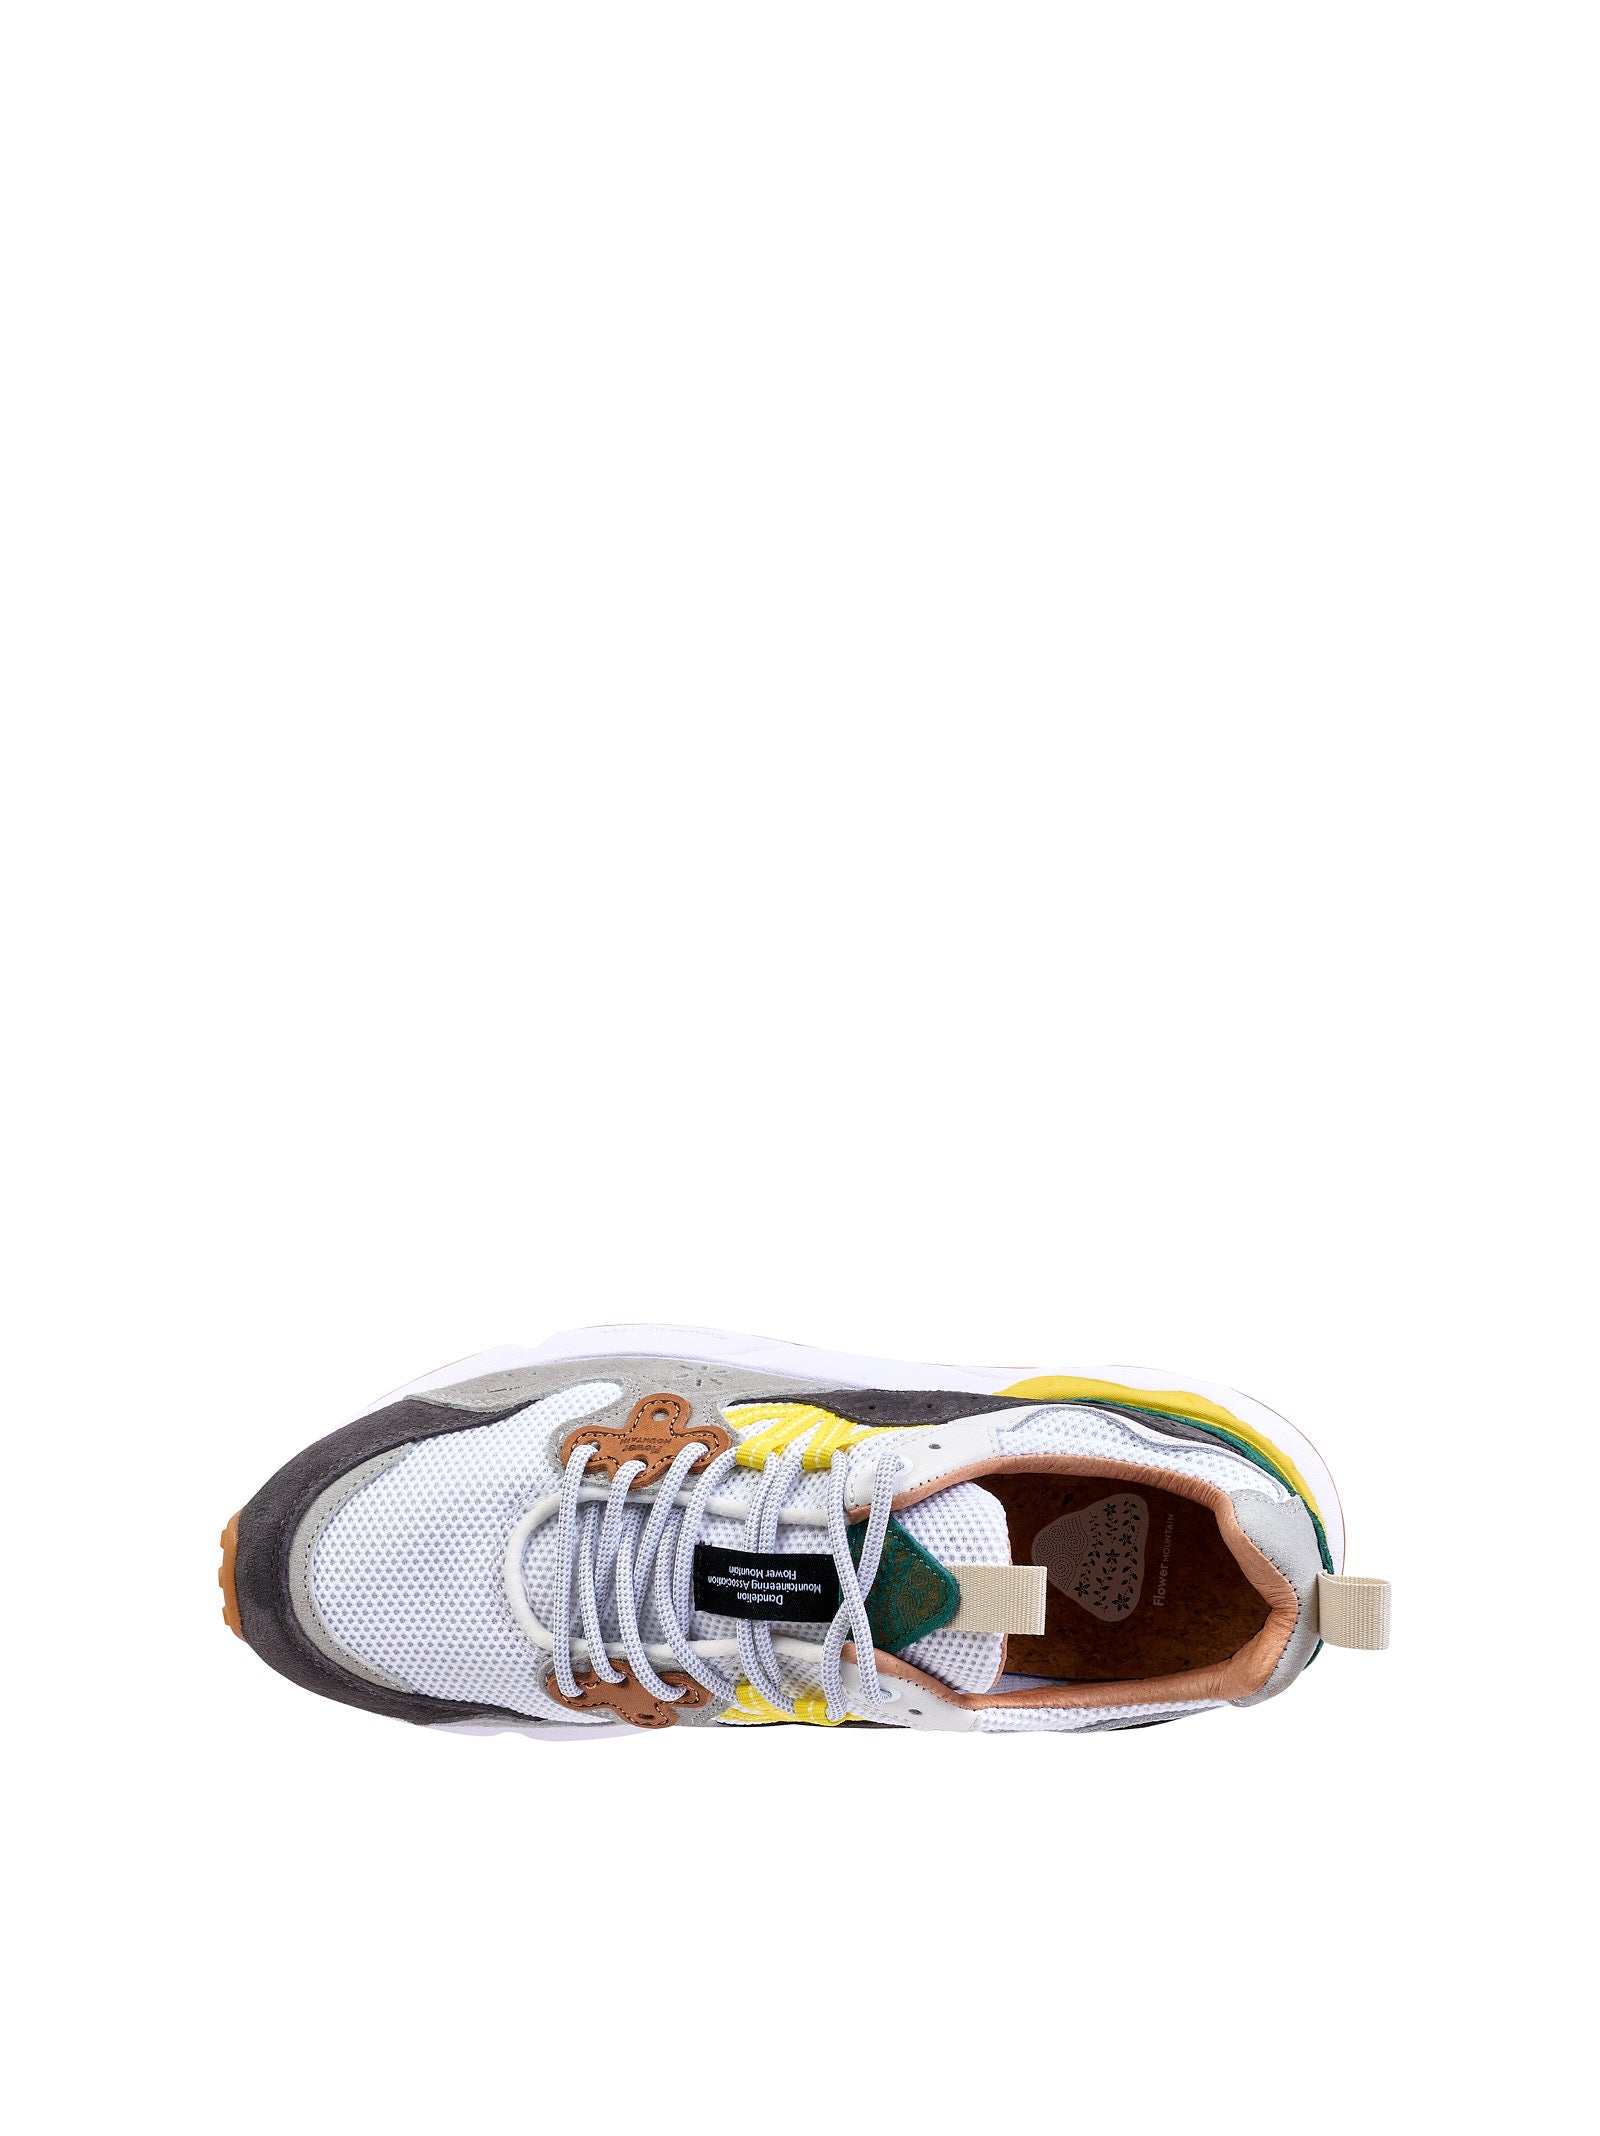 Sneakers FLOWER MOUNTAIN Yamano 3
Grey/white